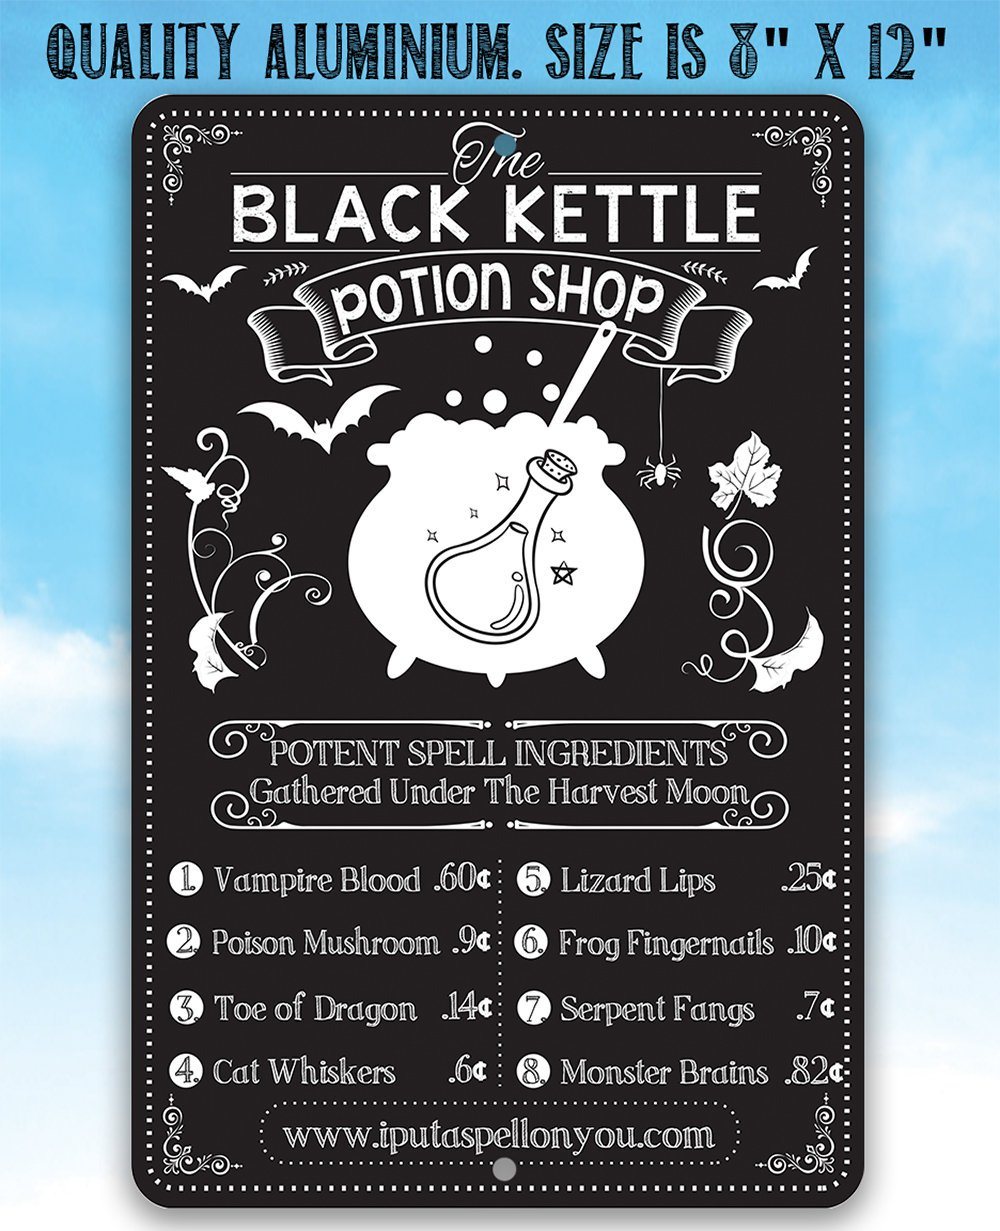 Black Kettle Potion Shop - Metal Sign | Lone Star Art.